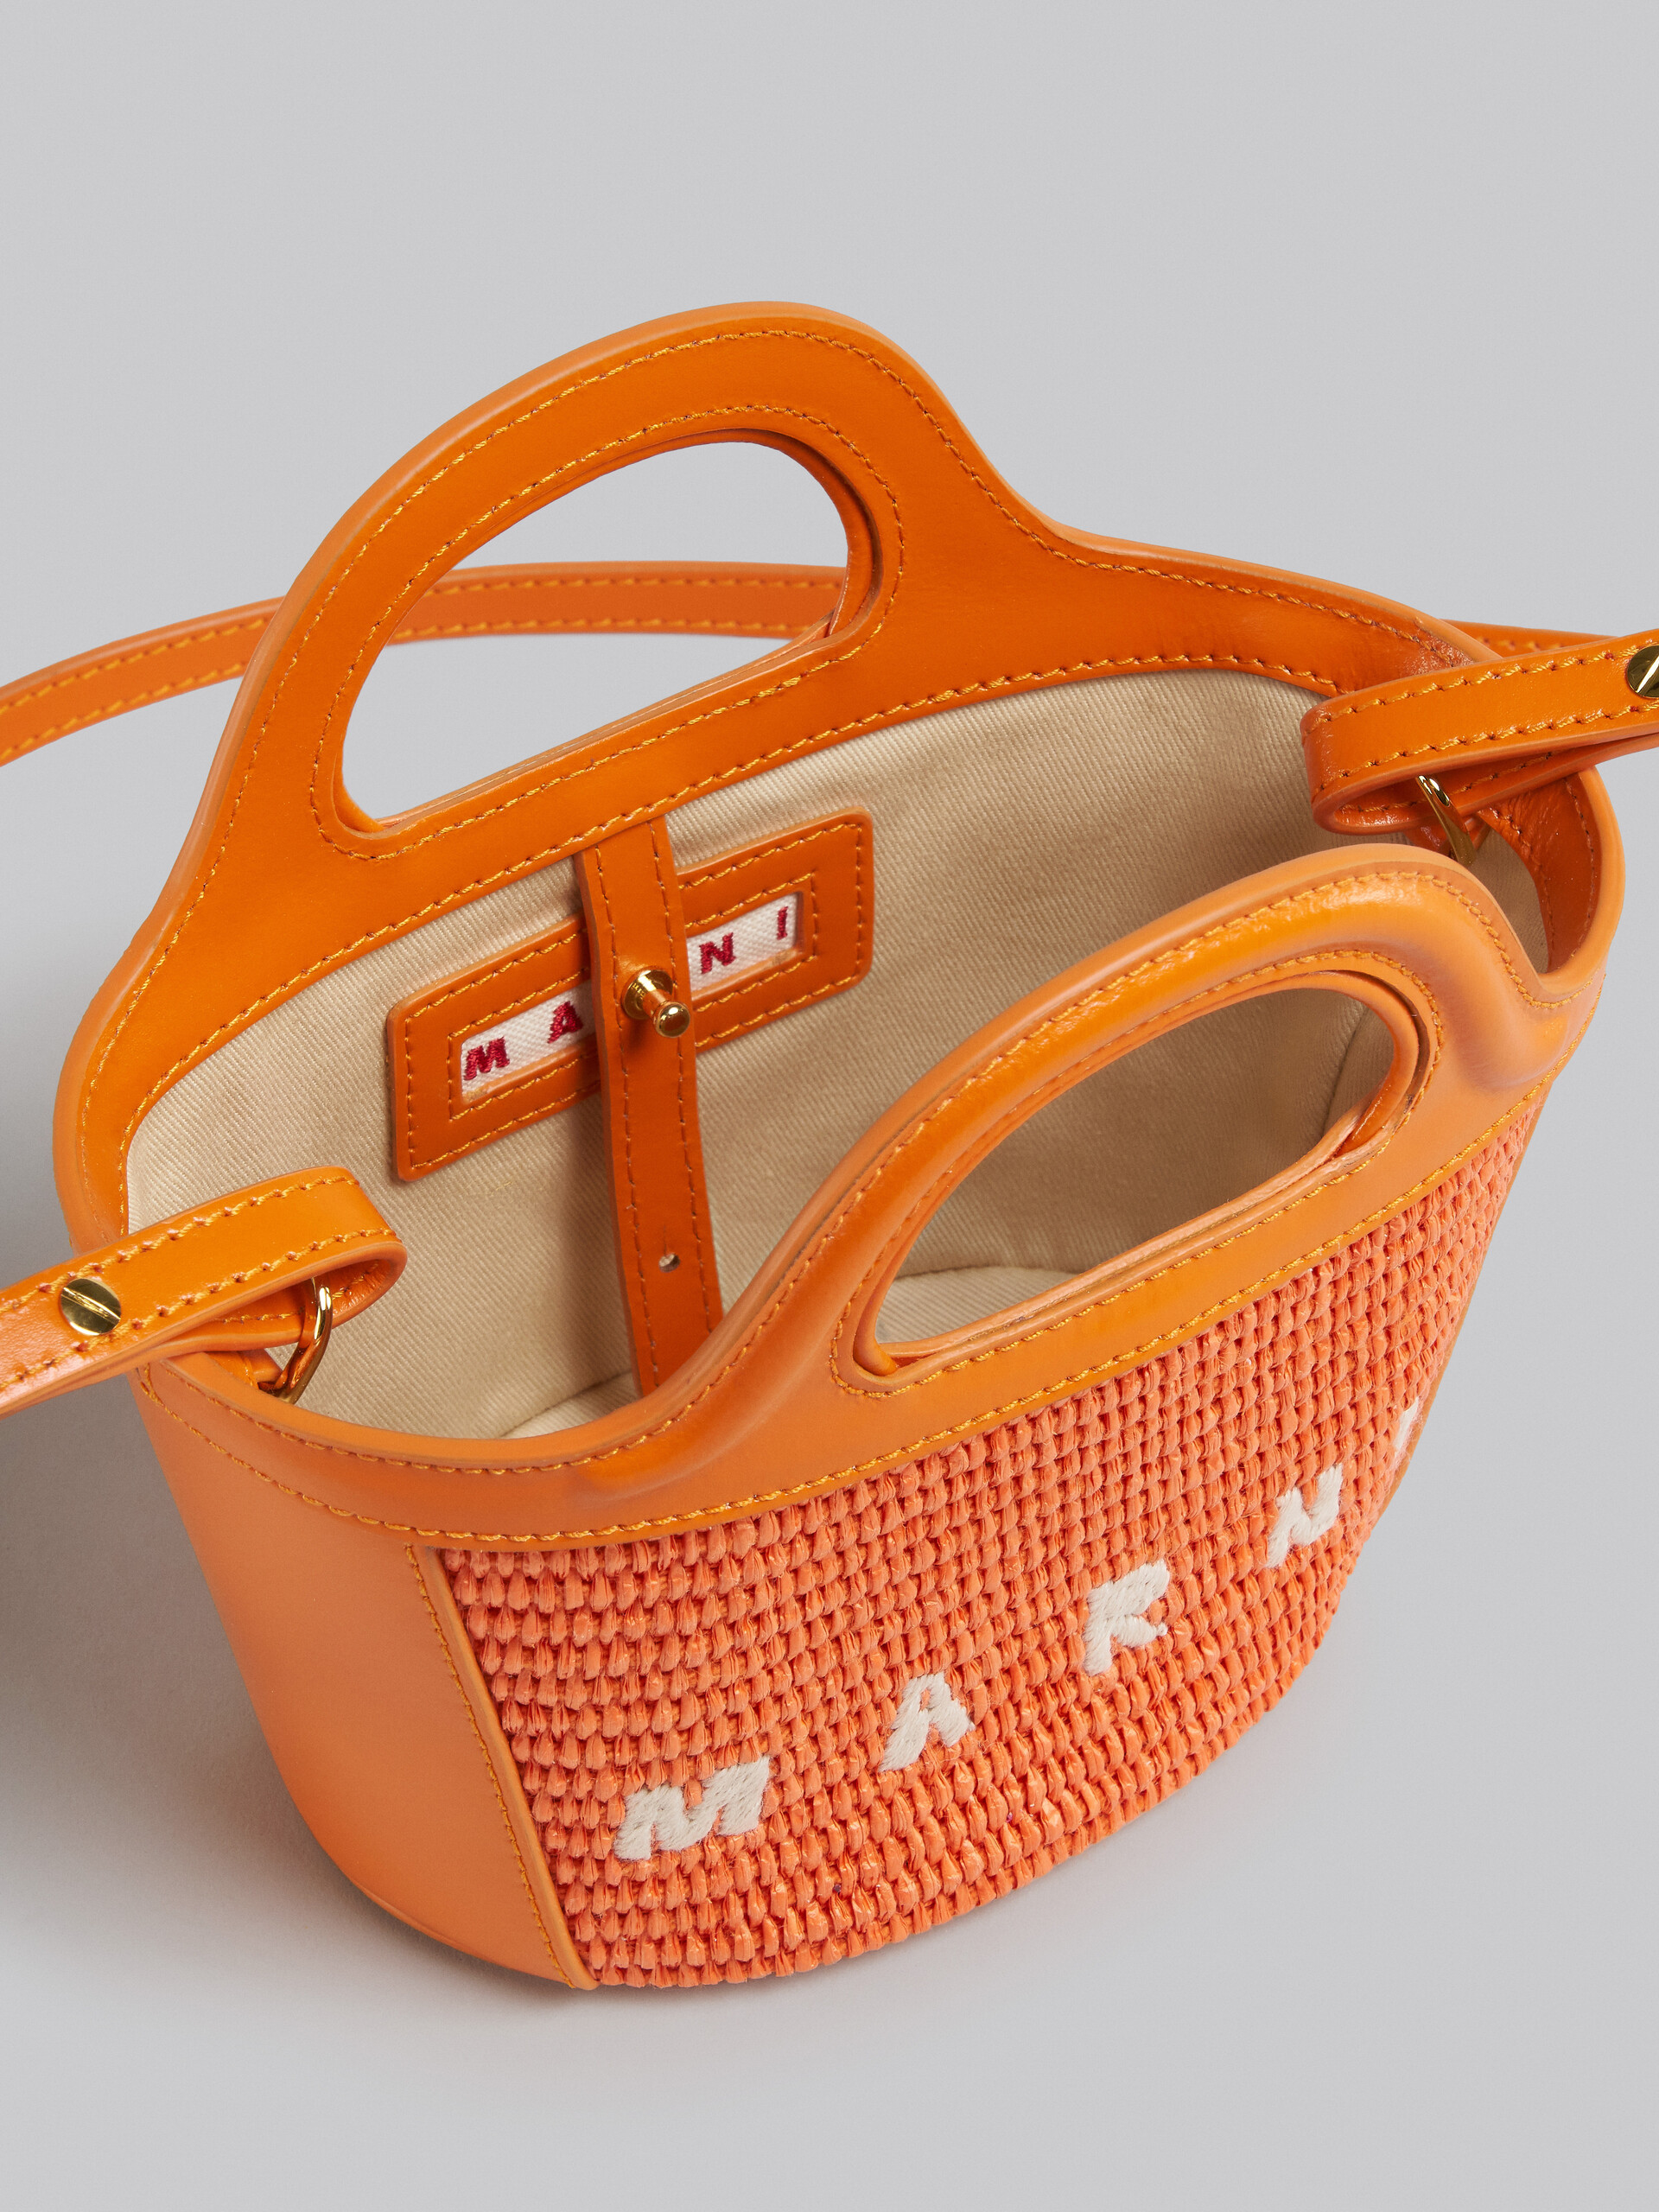 Tropicalia Micro Bag in orange leather and raffia - Handbag - Image 4